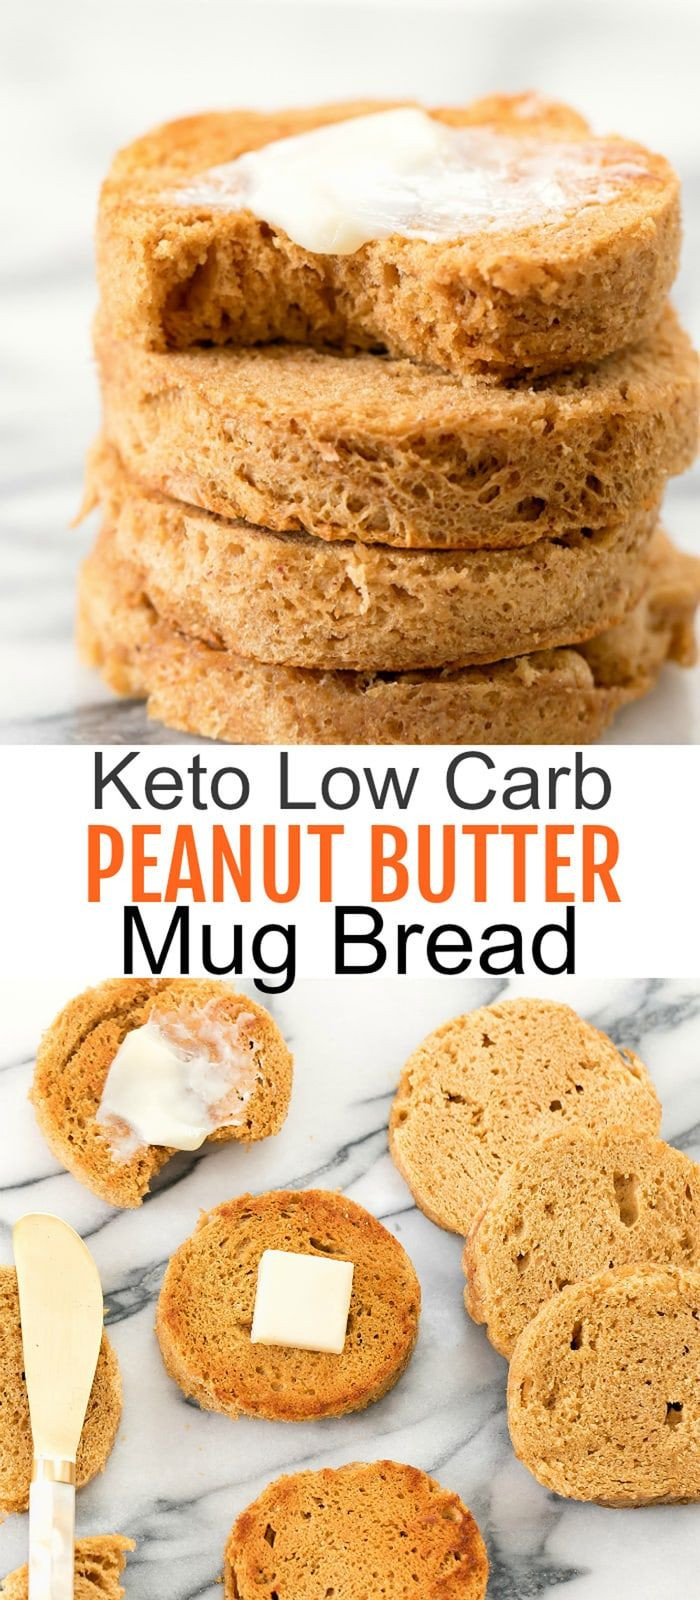 Peanut Butter Bread Keto
 Keto Microwave Peanut Butter Bread Recipe